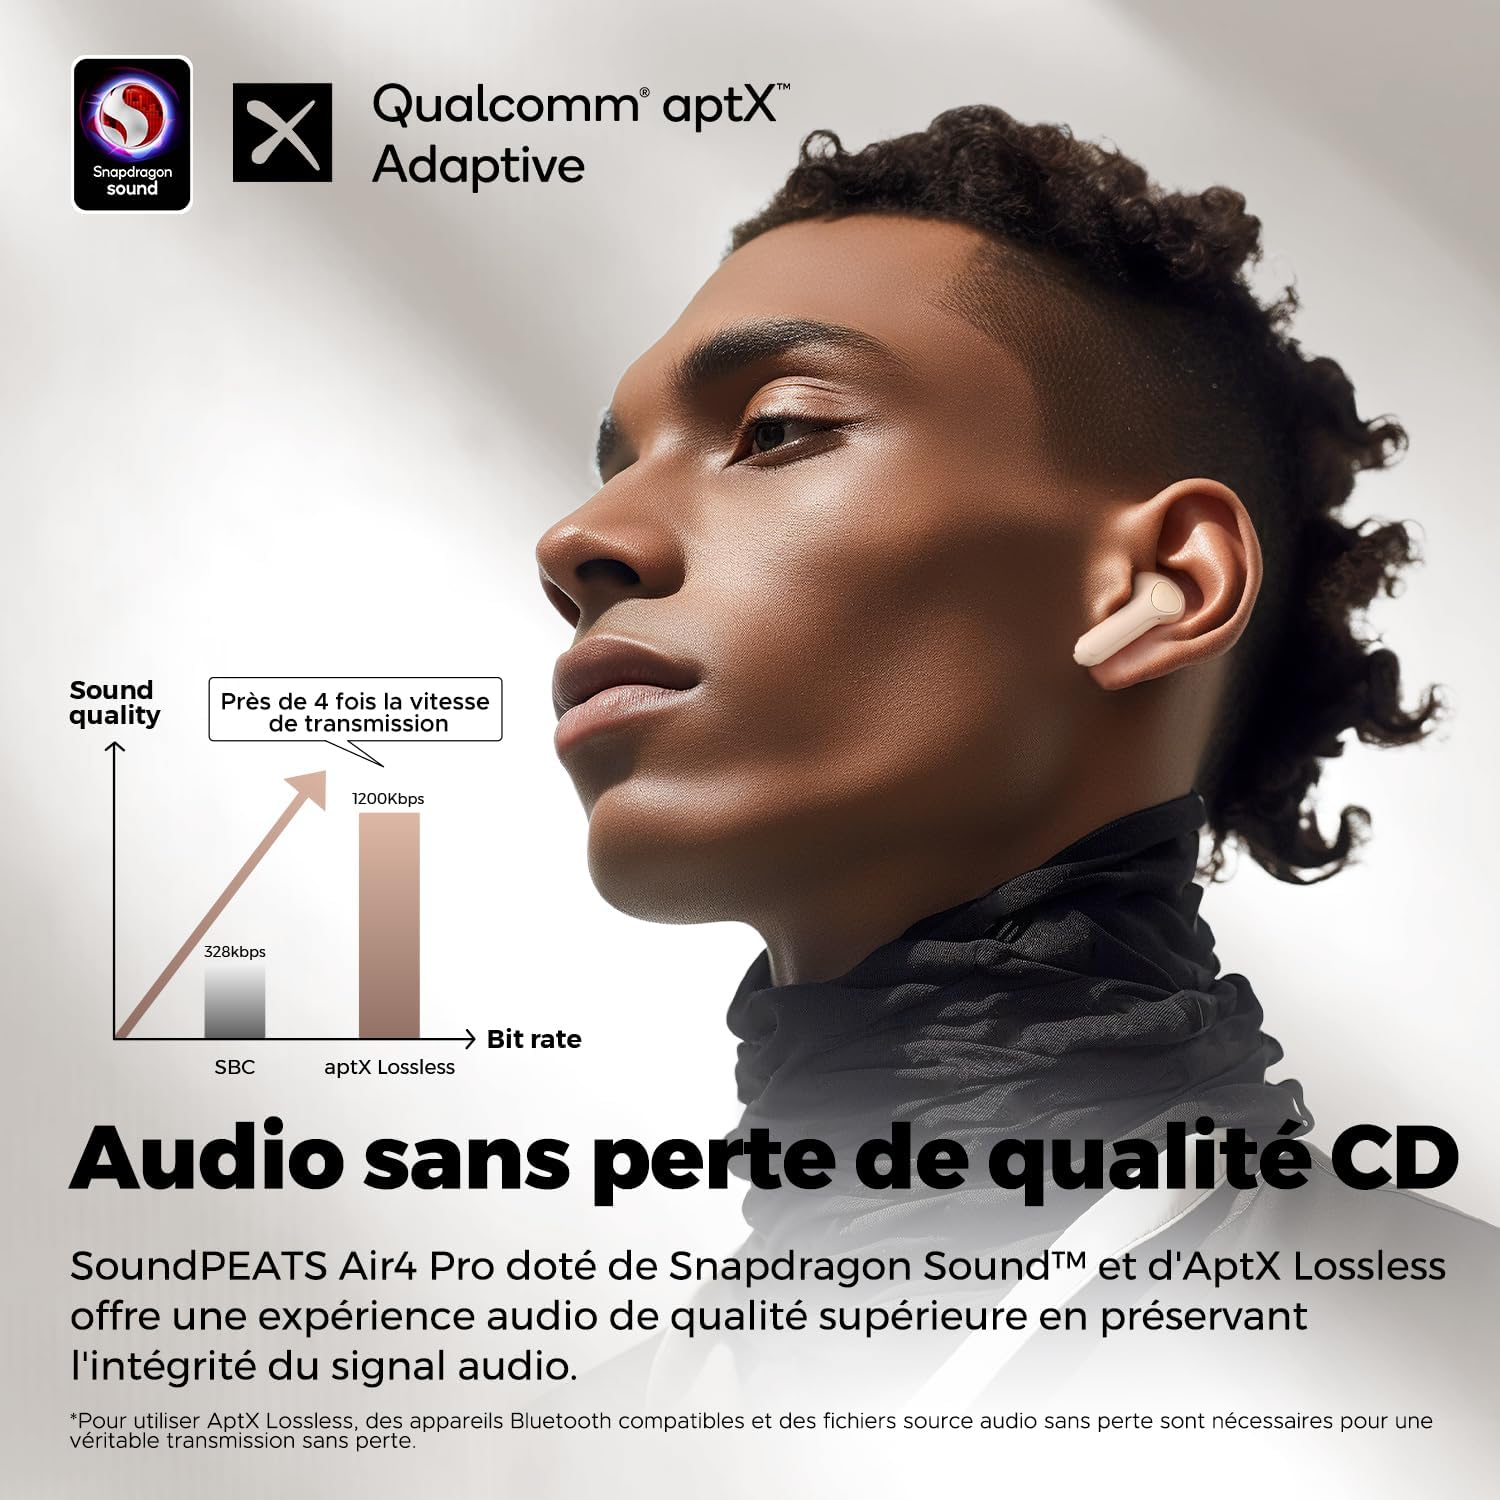 Soundpeats Air4 Pro